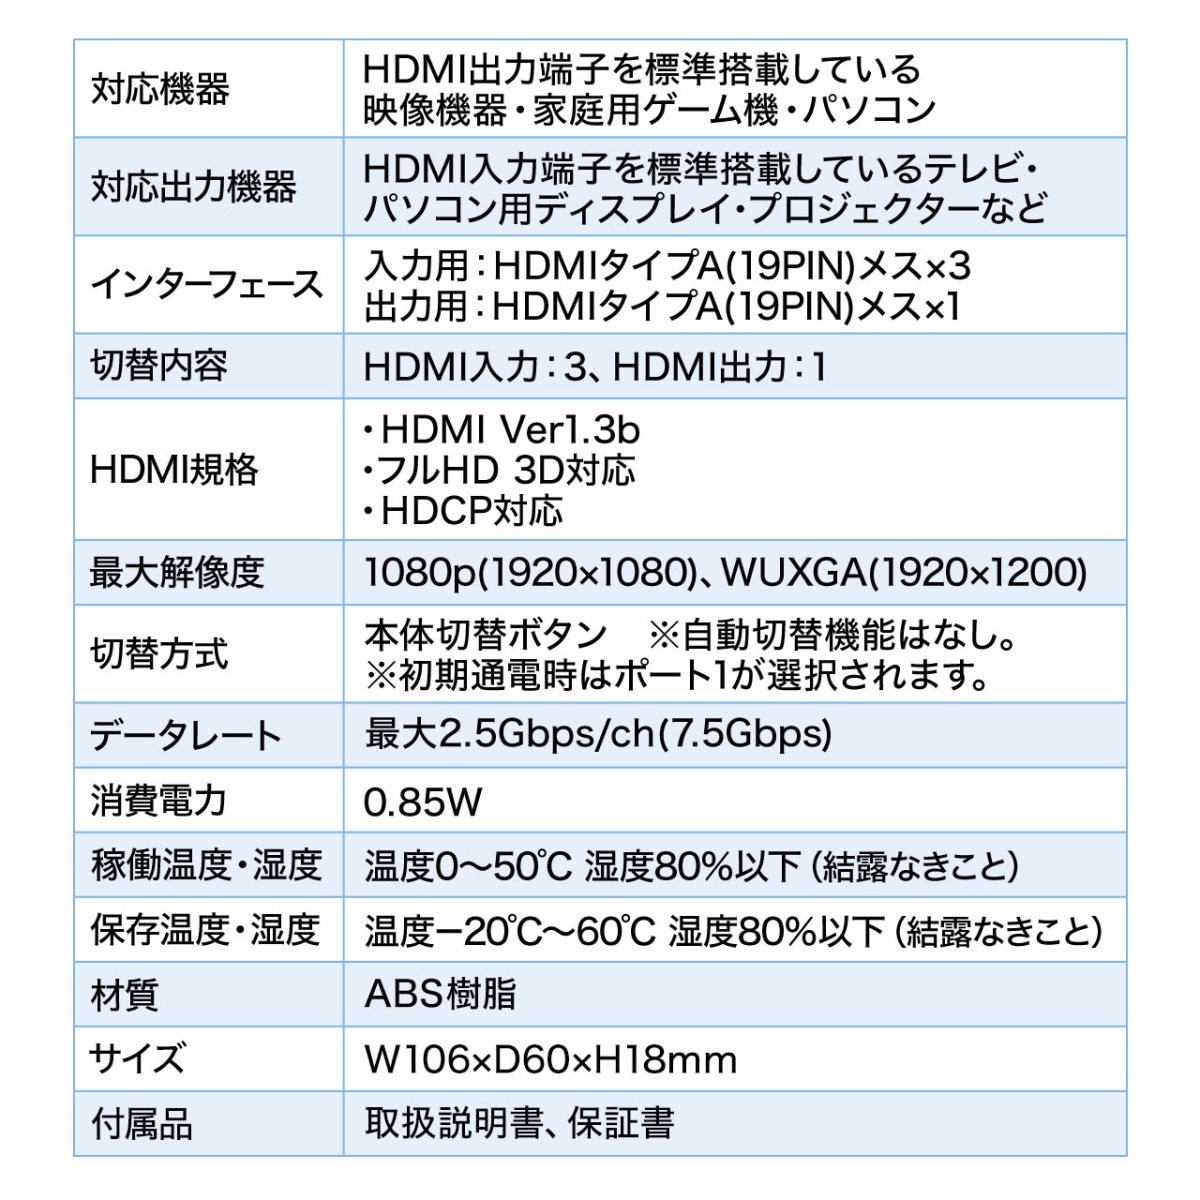 HDMI切替器 HDMIセレクター 手動切替 3入力1出力 電源不要 400-SW018｜sanwadirect｜08